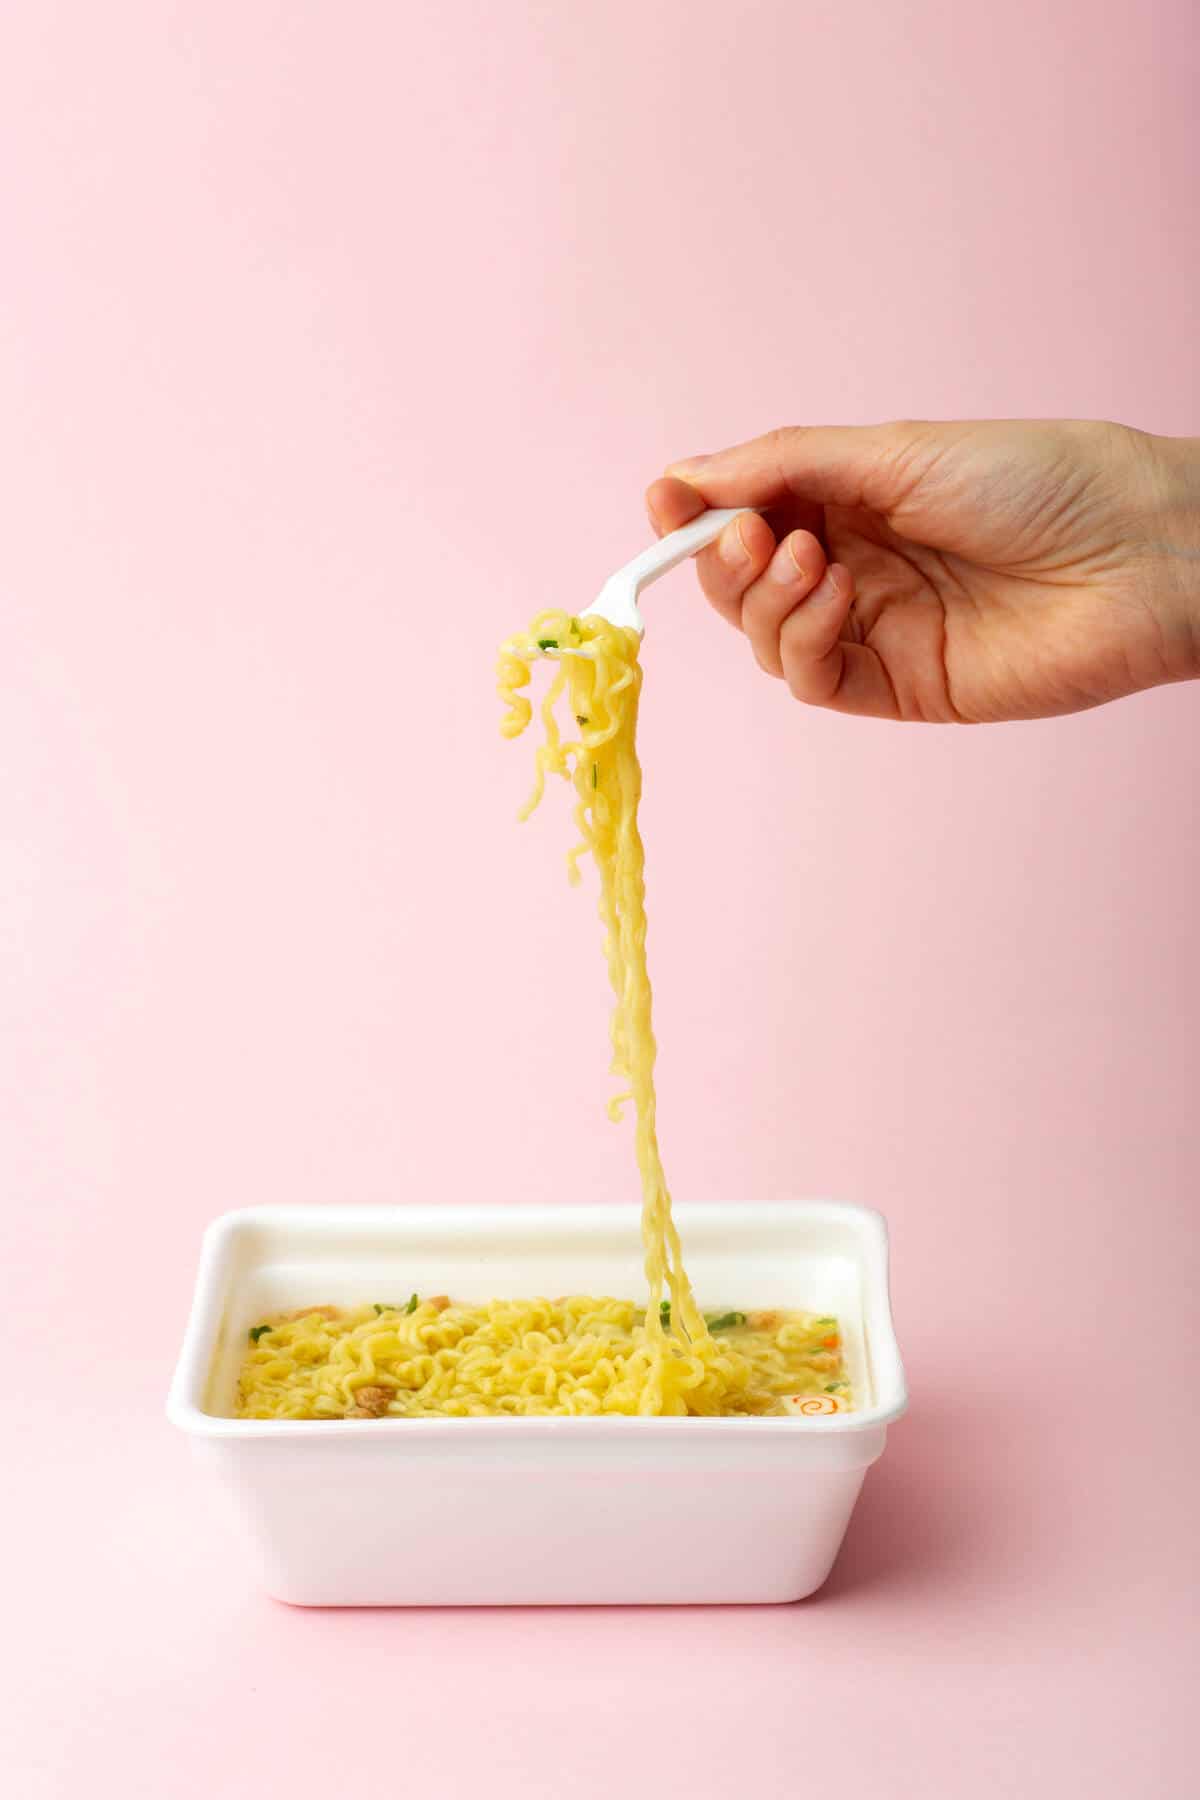 Are Maruchan Top Ramen Cup Noodles Vegan?